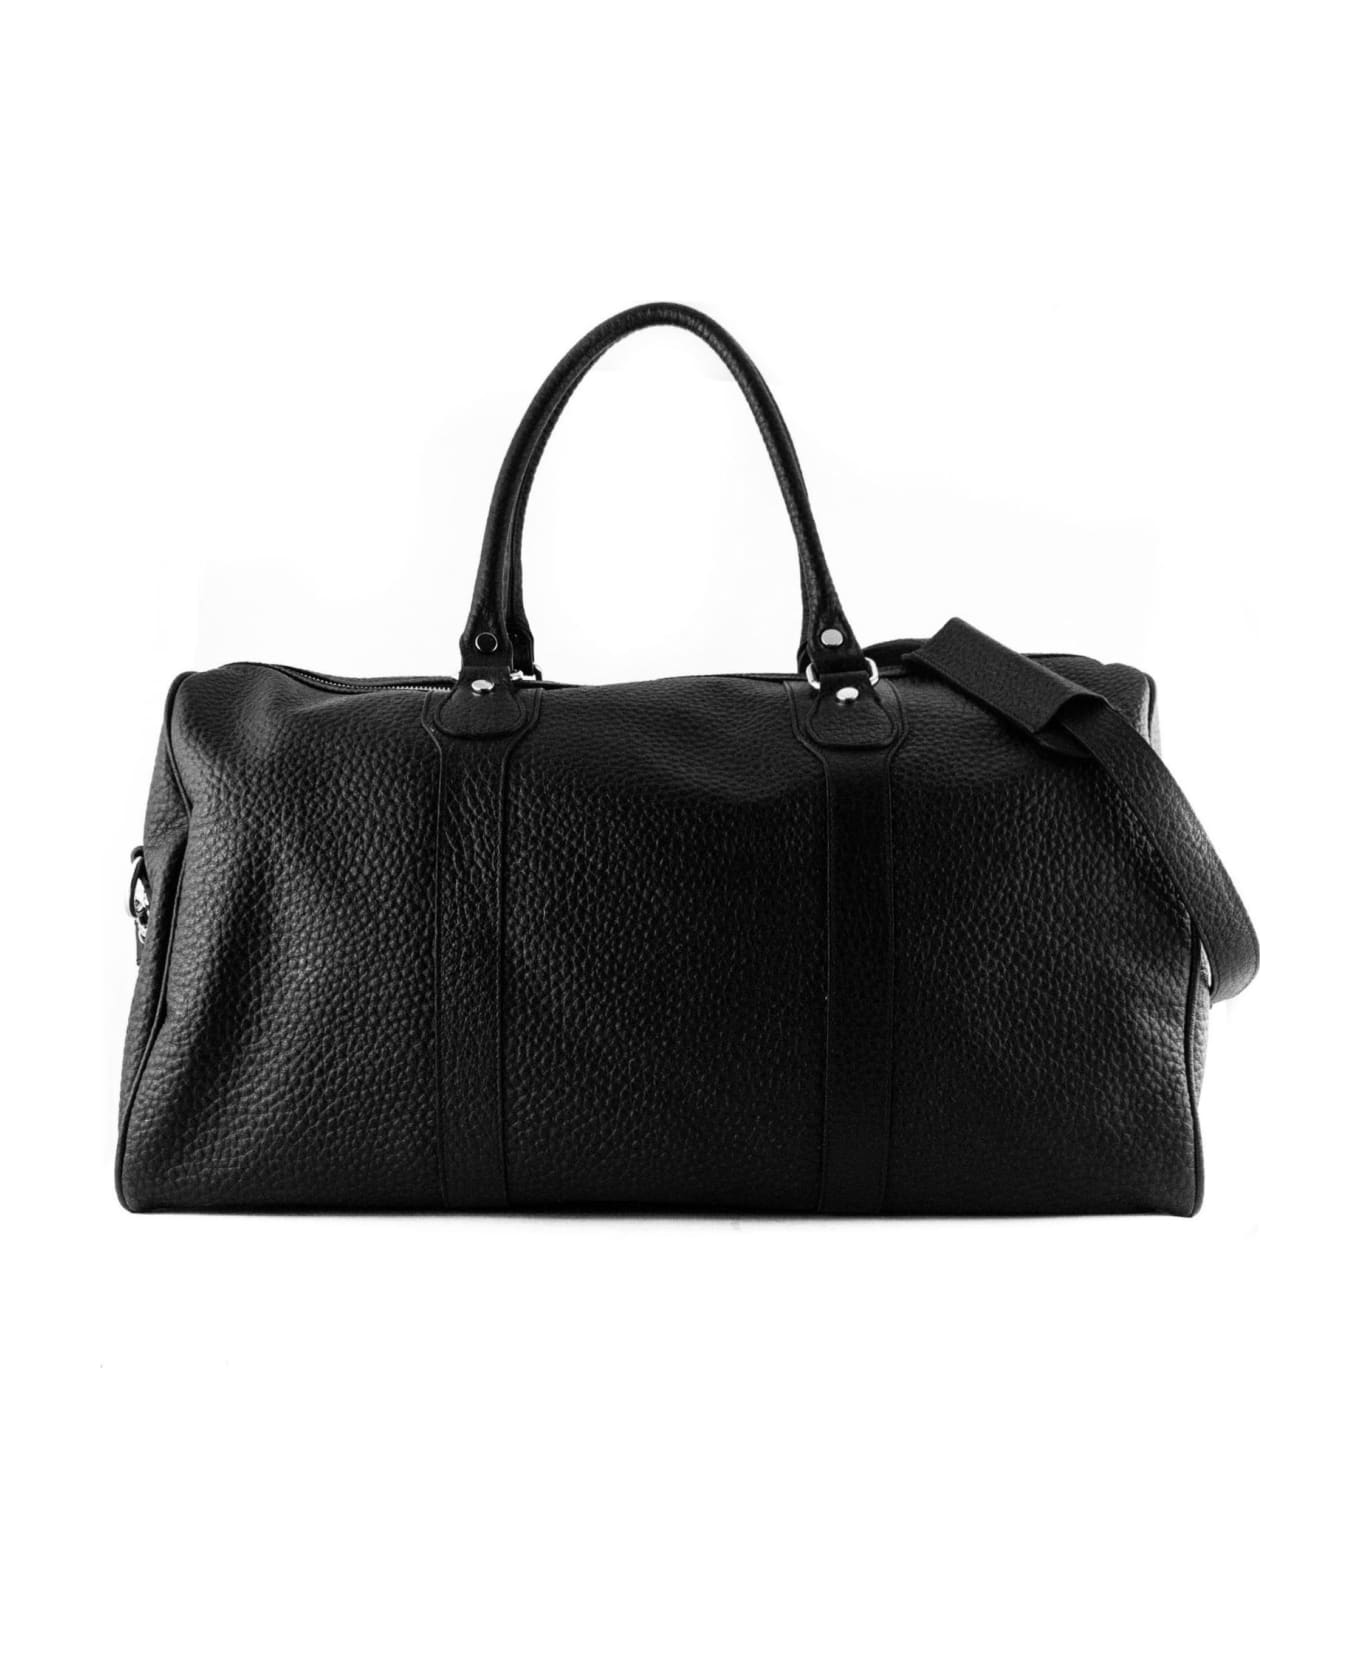 Avenue 67 Black Leather Duffel Bag - Black